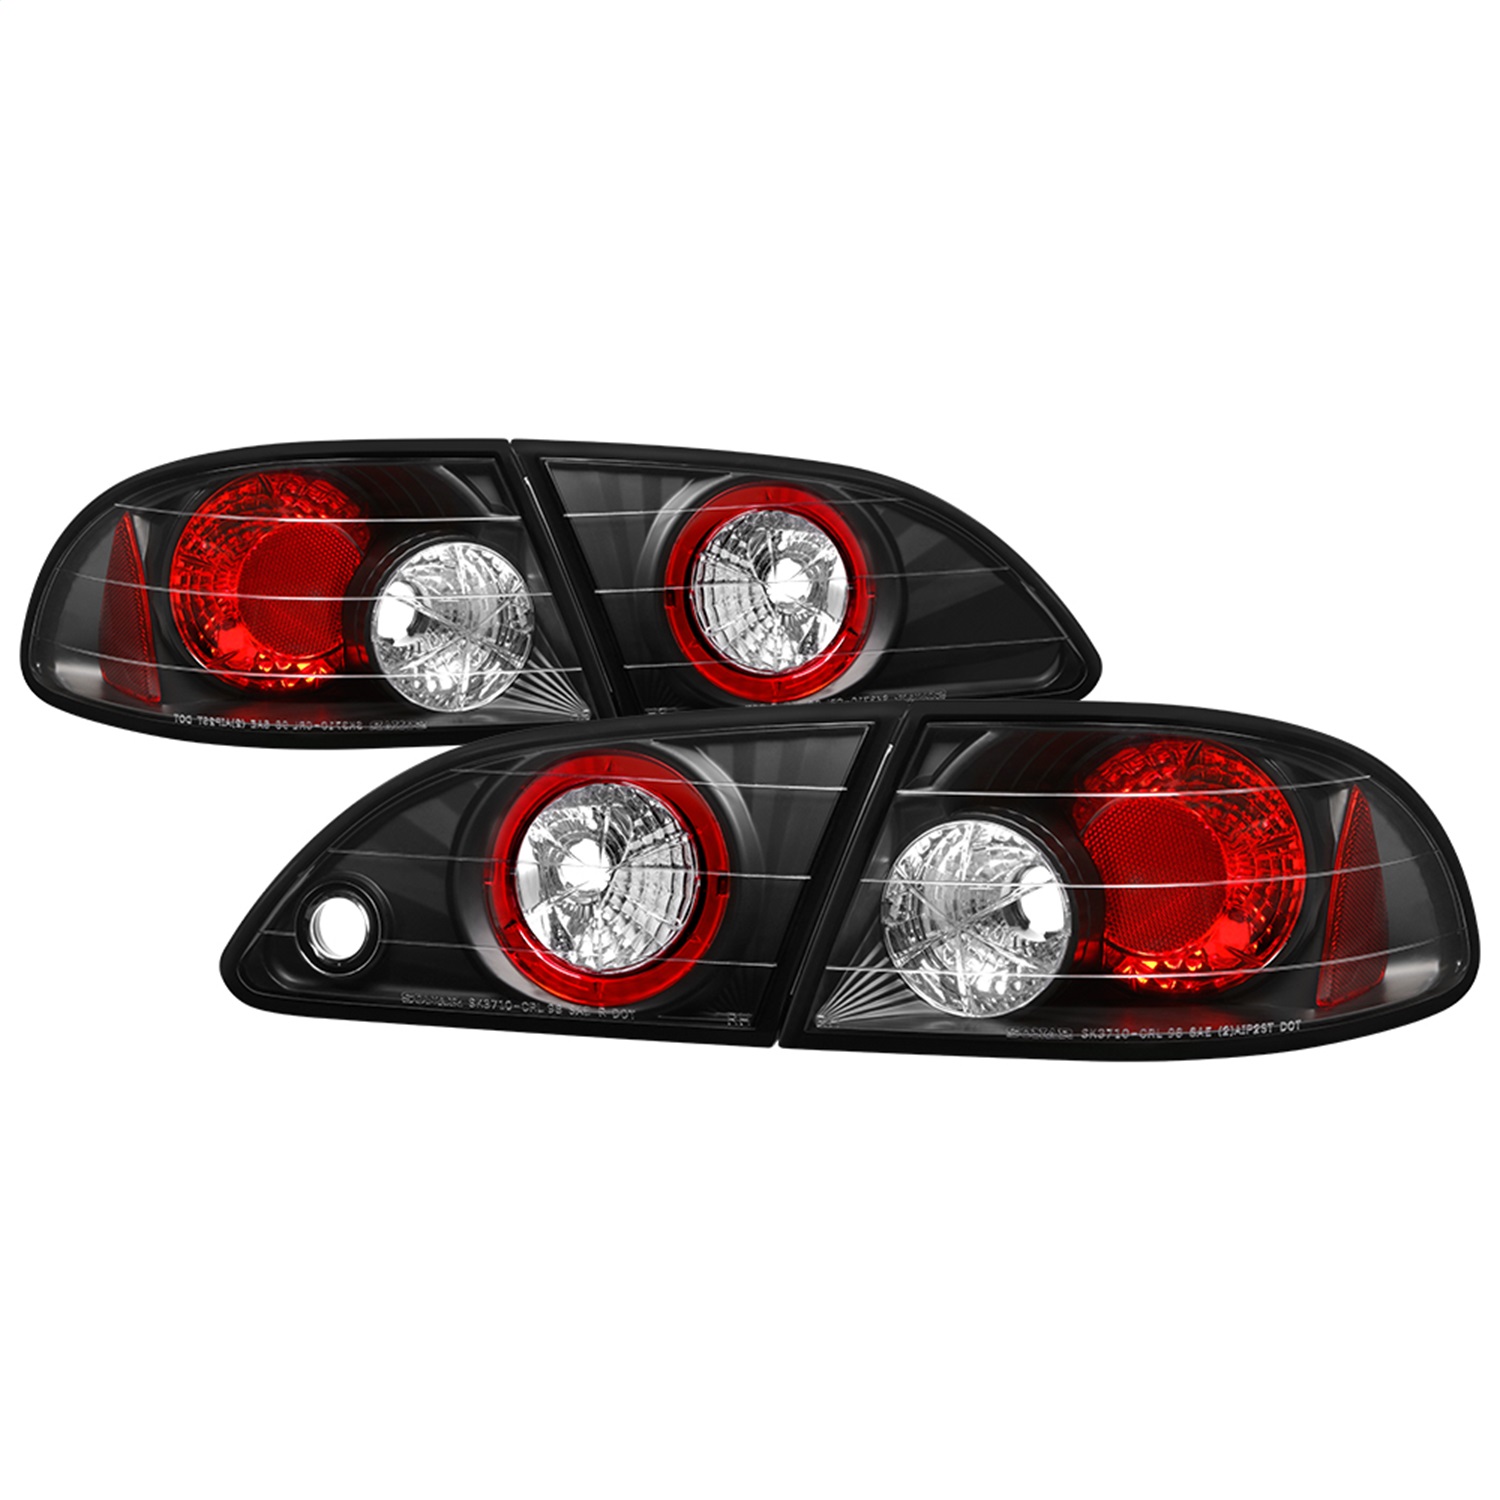 Spyder Auto 5007476 Euro Style Tail Lights Fits 98-02 Corolla